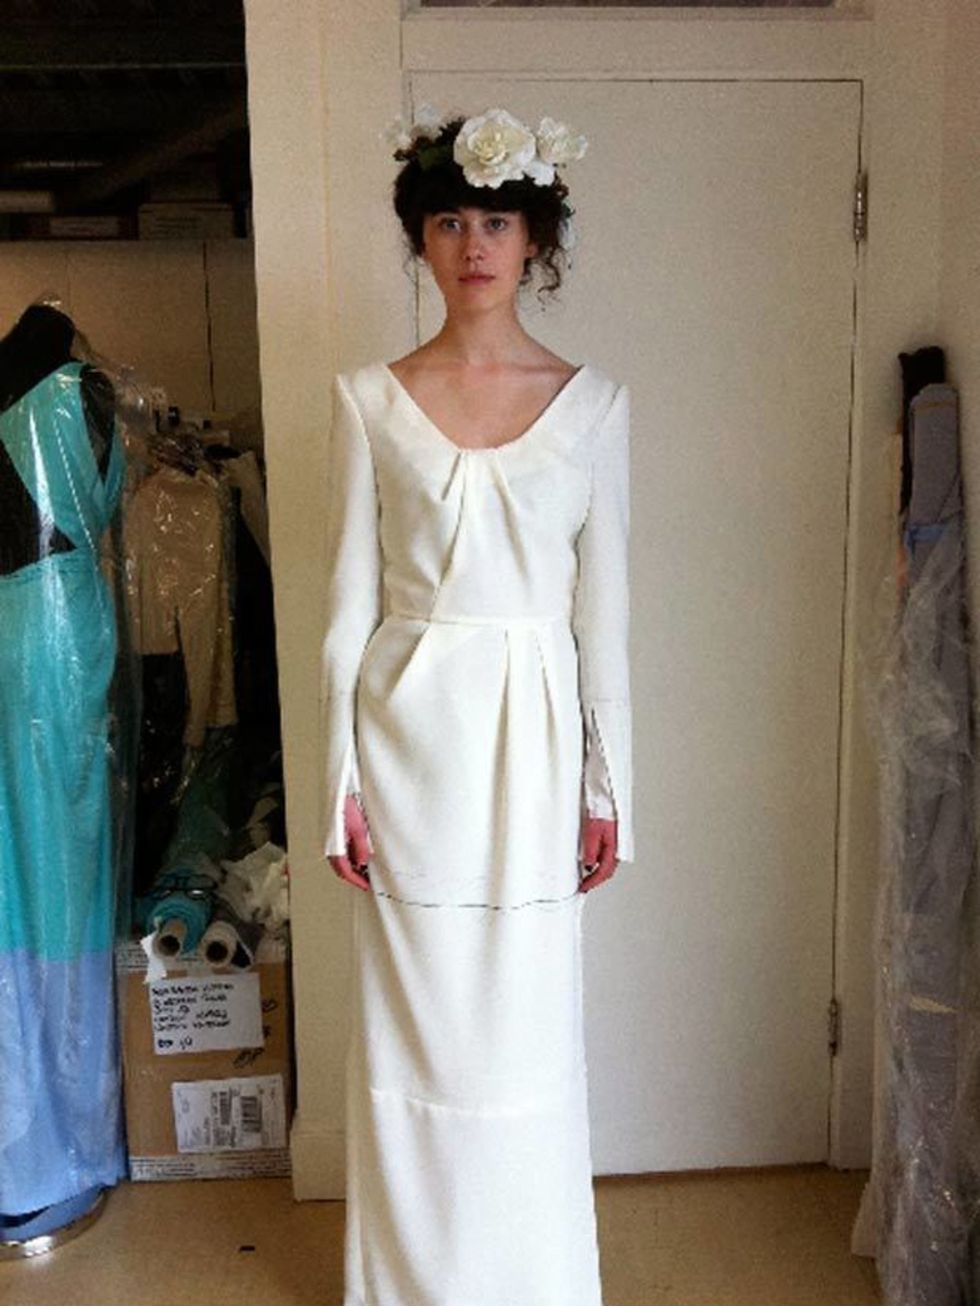 <p>Studio Prep: From <a href="http://www.elleuk.com/news/fashion-news/london-latest-roksanda-illincic/(gid)/806303">Roksanda Ilincic</a>. Our adorable intern Holly looking stunning in a toile fitting. Her look today has us dreaming of midsummer weddings.